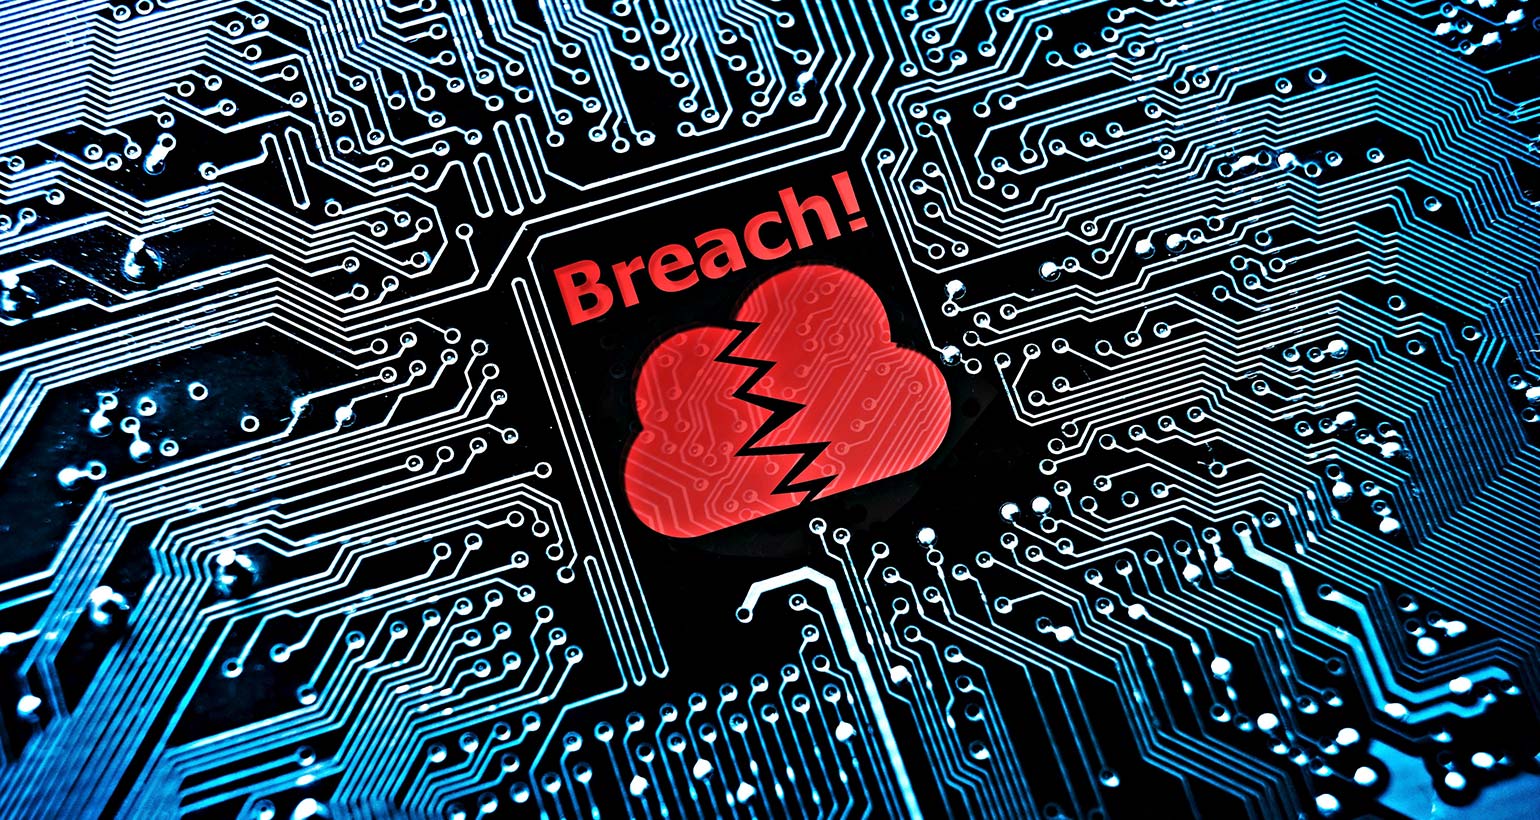 An artistic rendering of a data breach on a microchip.